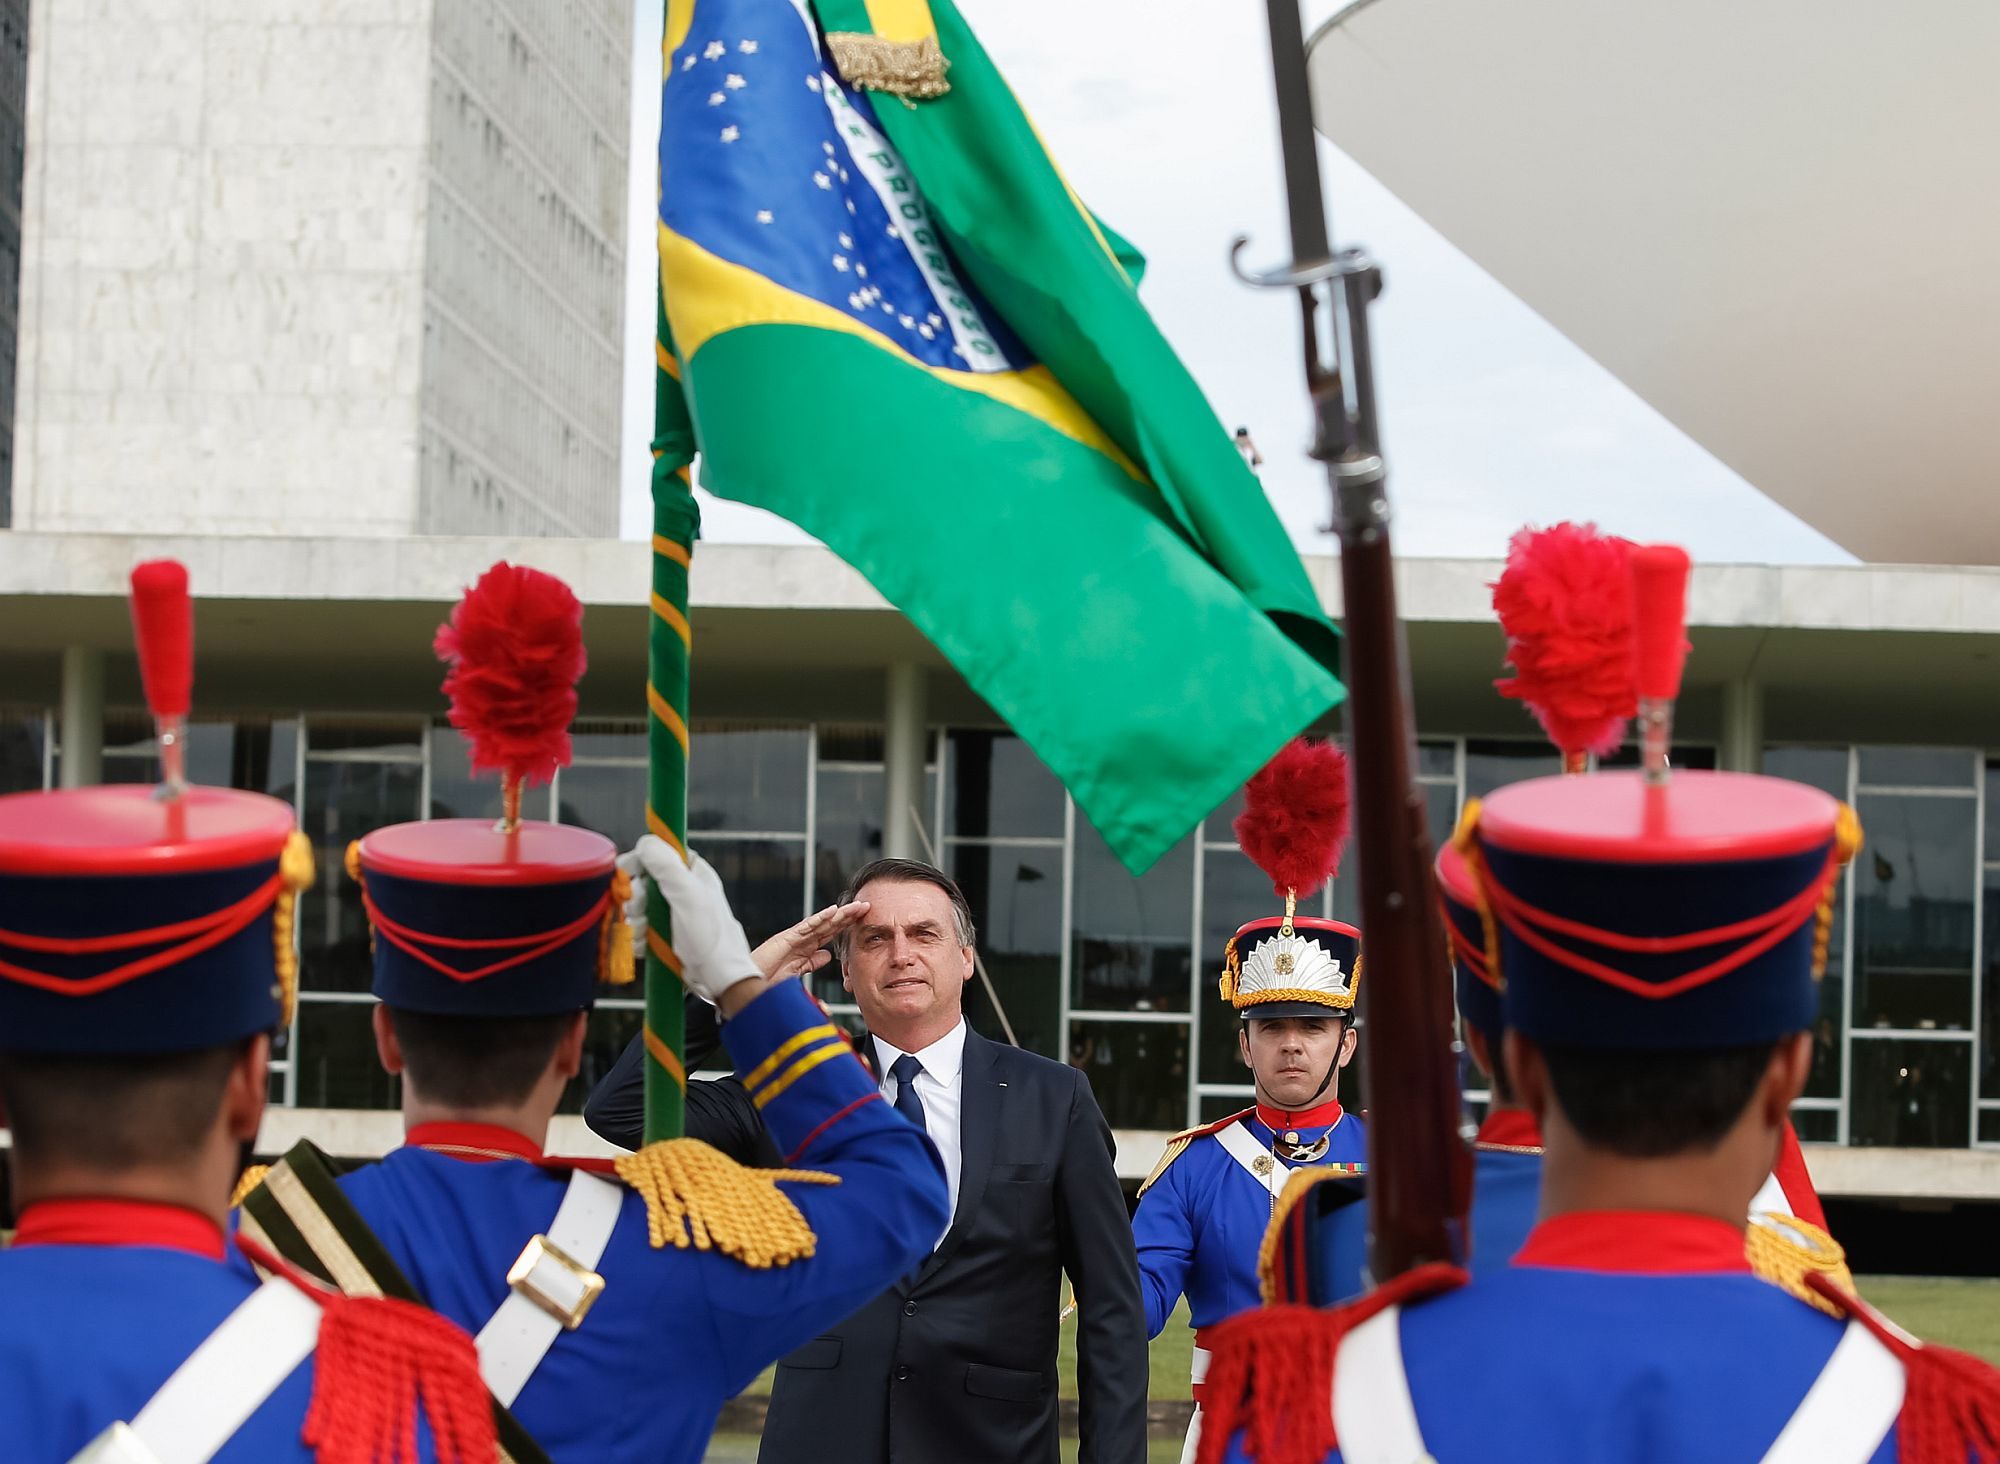 Bolsonaro's at inauguration ceremony with Dragões da Independência